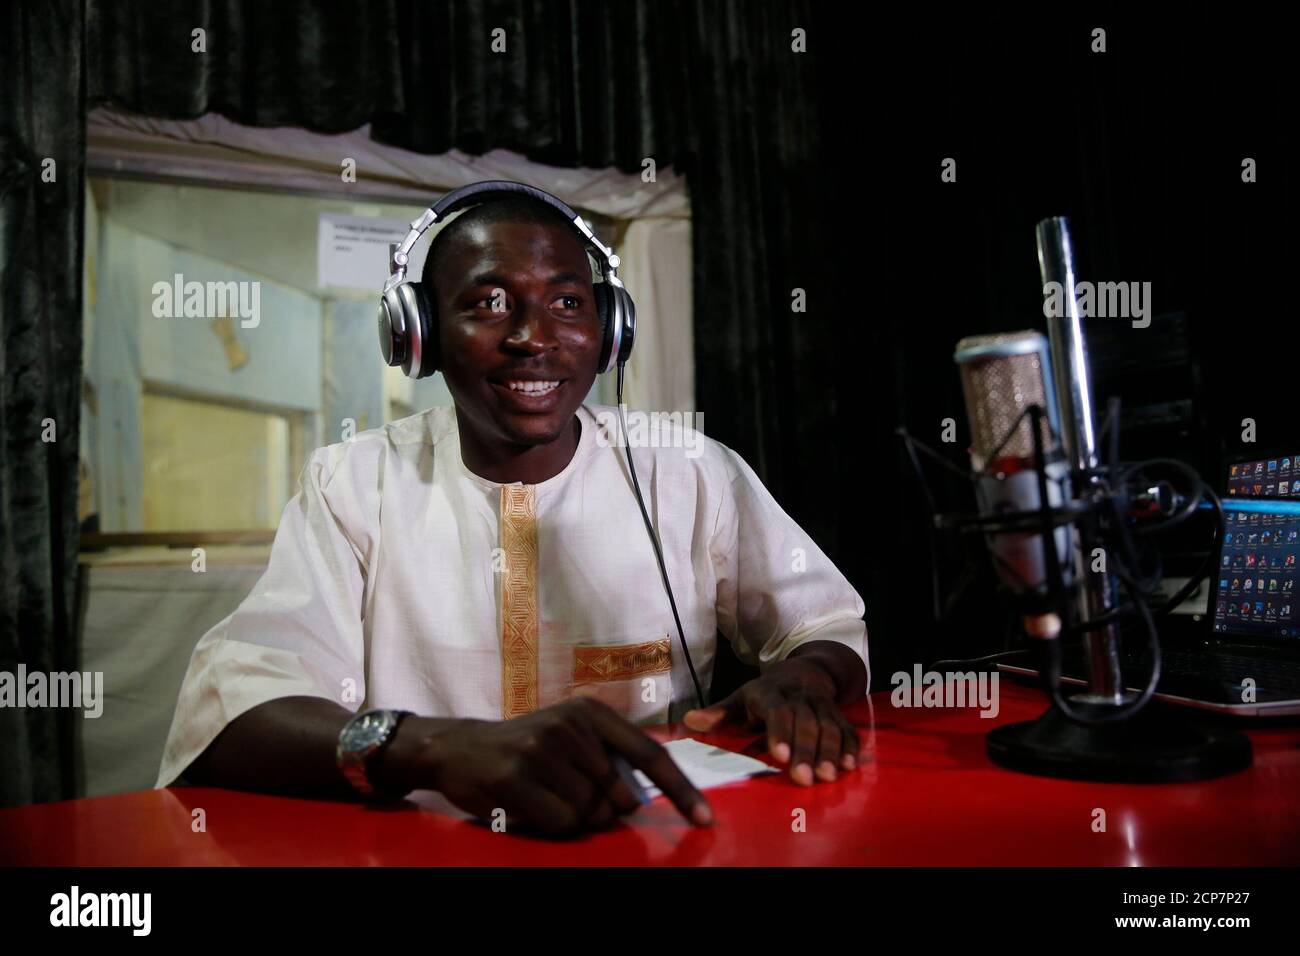 Presenter Nura Umar speaks into a microphone during a shortwave broadcast  for Dandal Kura at a radio station in Nigeria's northern region of Kano,  January 18, 2016. Dandal Kura, Kanuri for "meeting